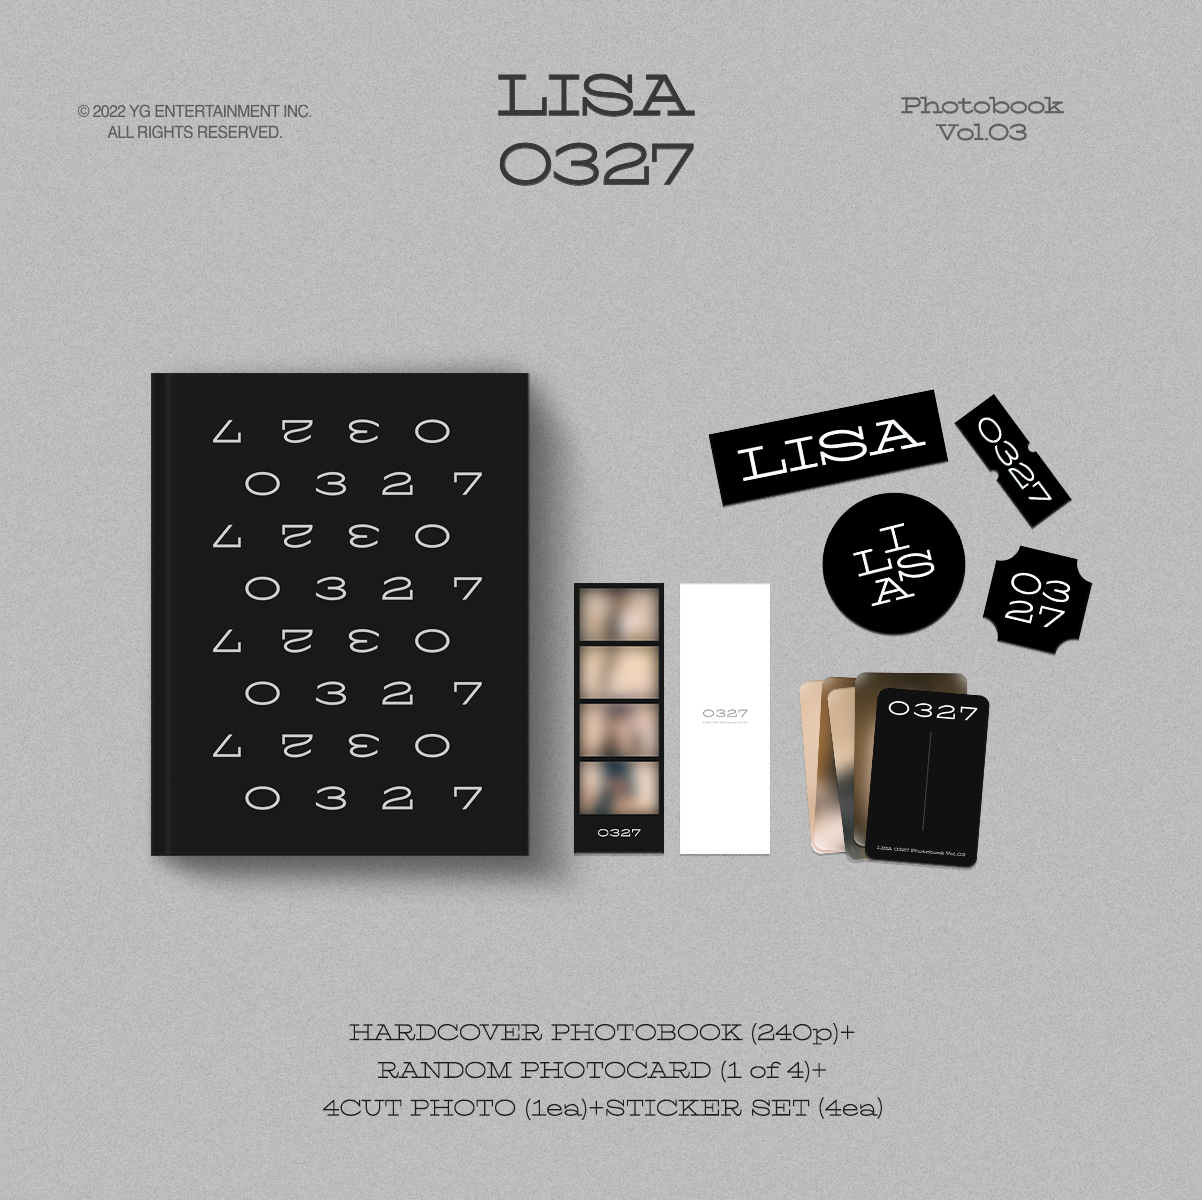 BLACKPINK LISA 0327 Photobook Vol.03